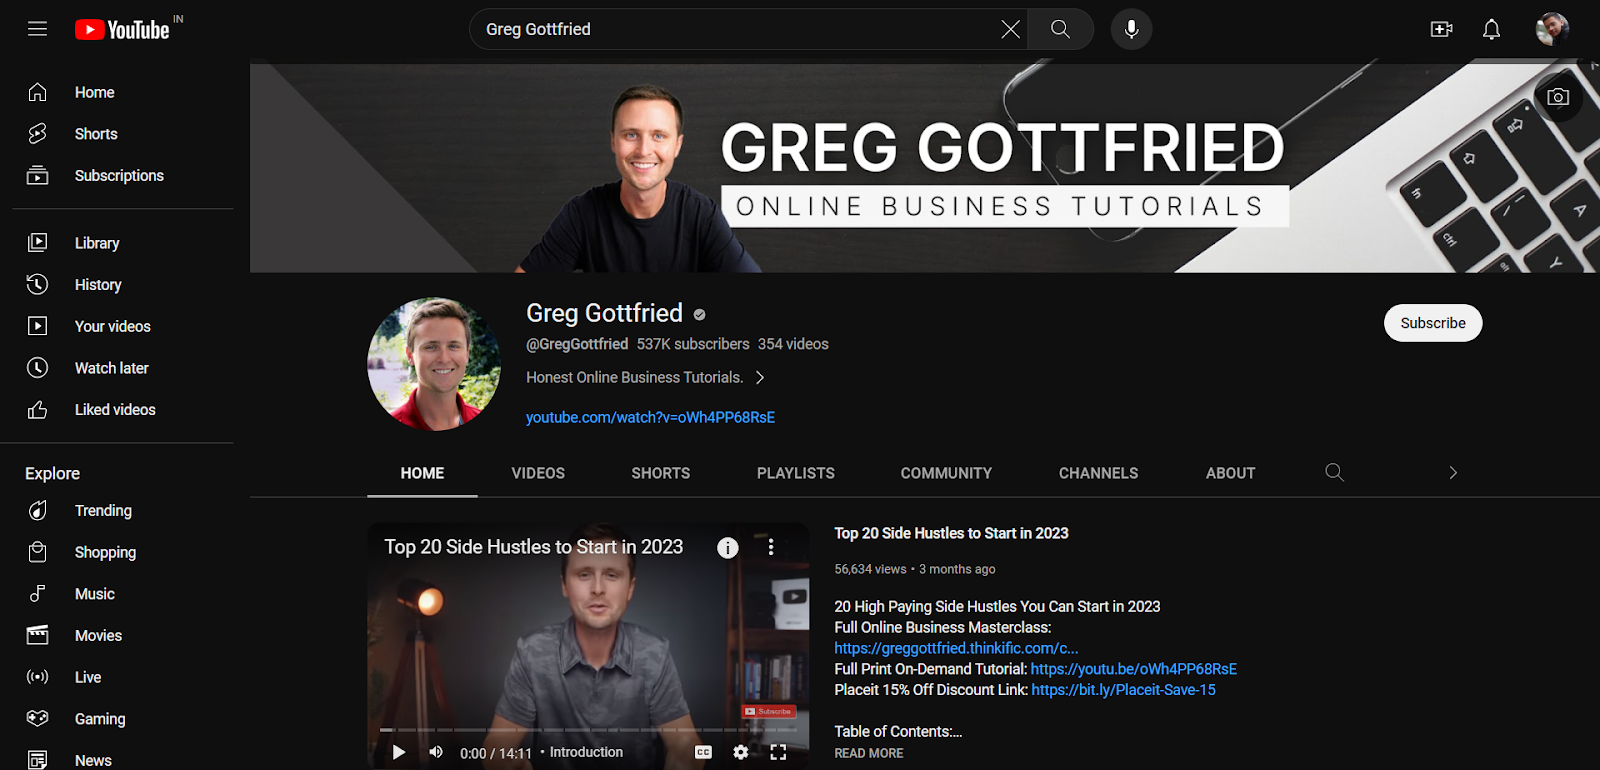 Greg Gottfried's YouTube channel